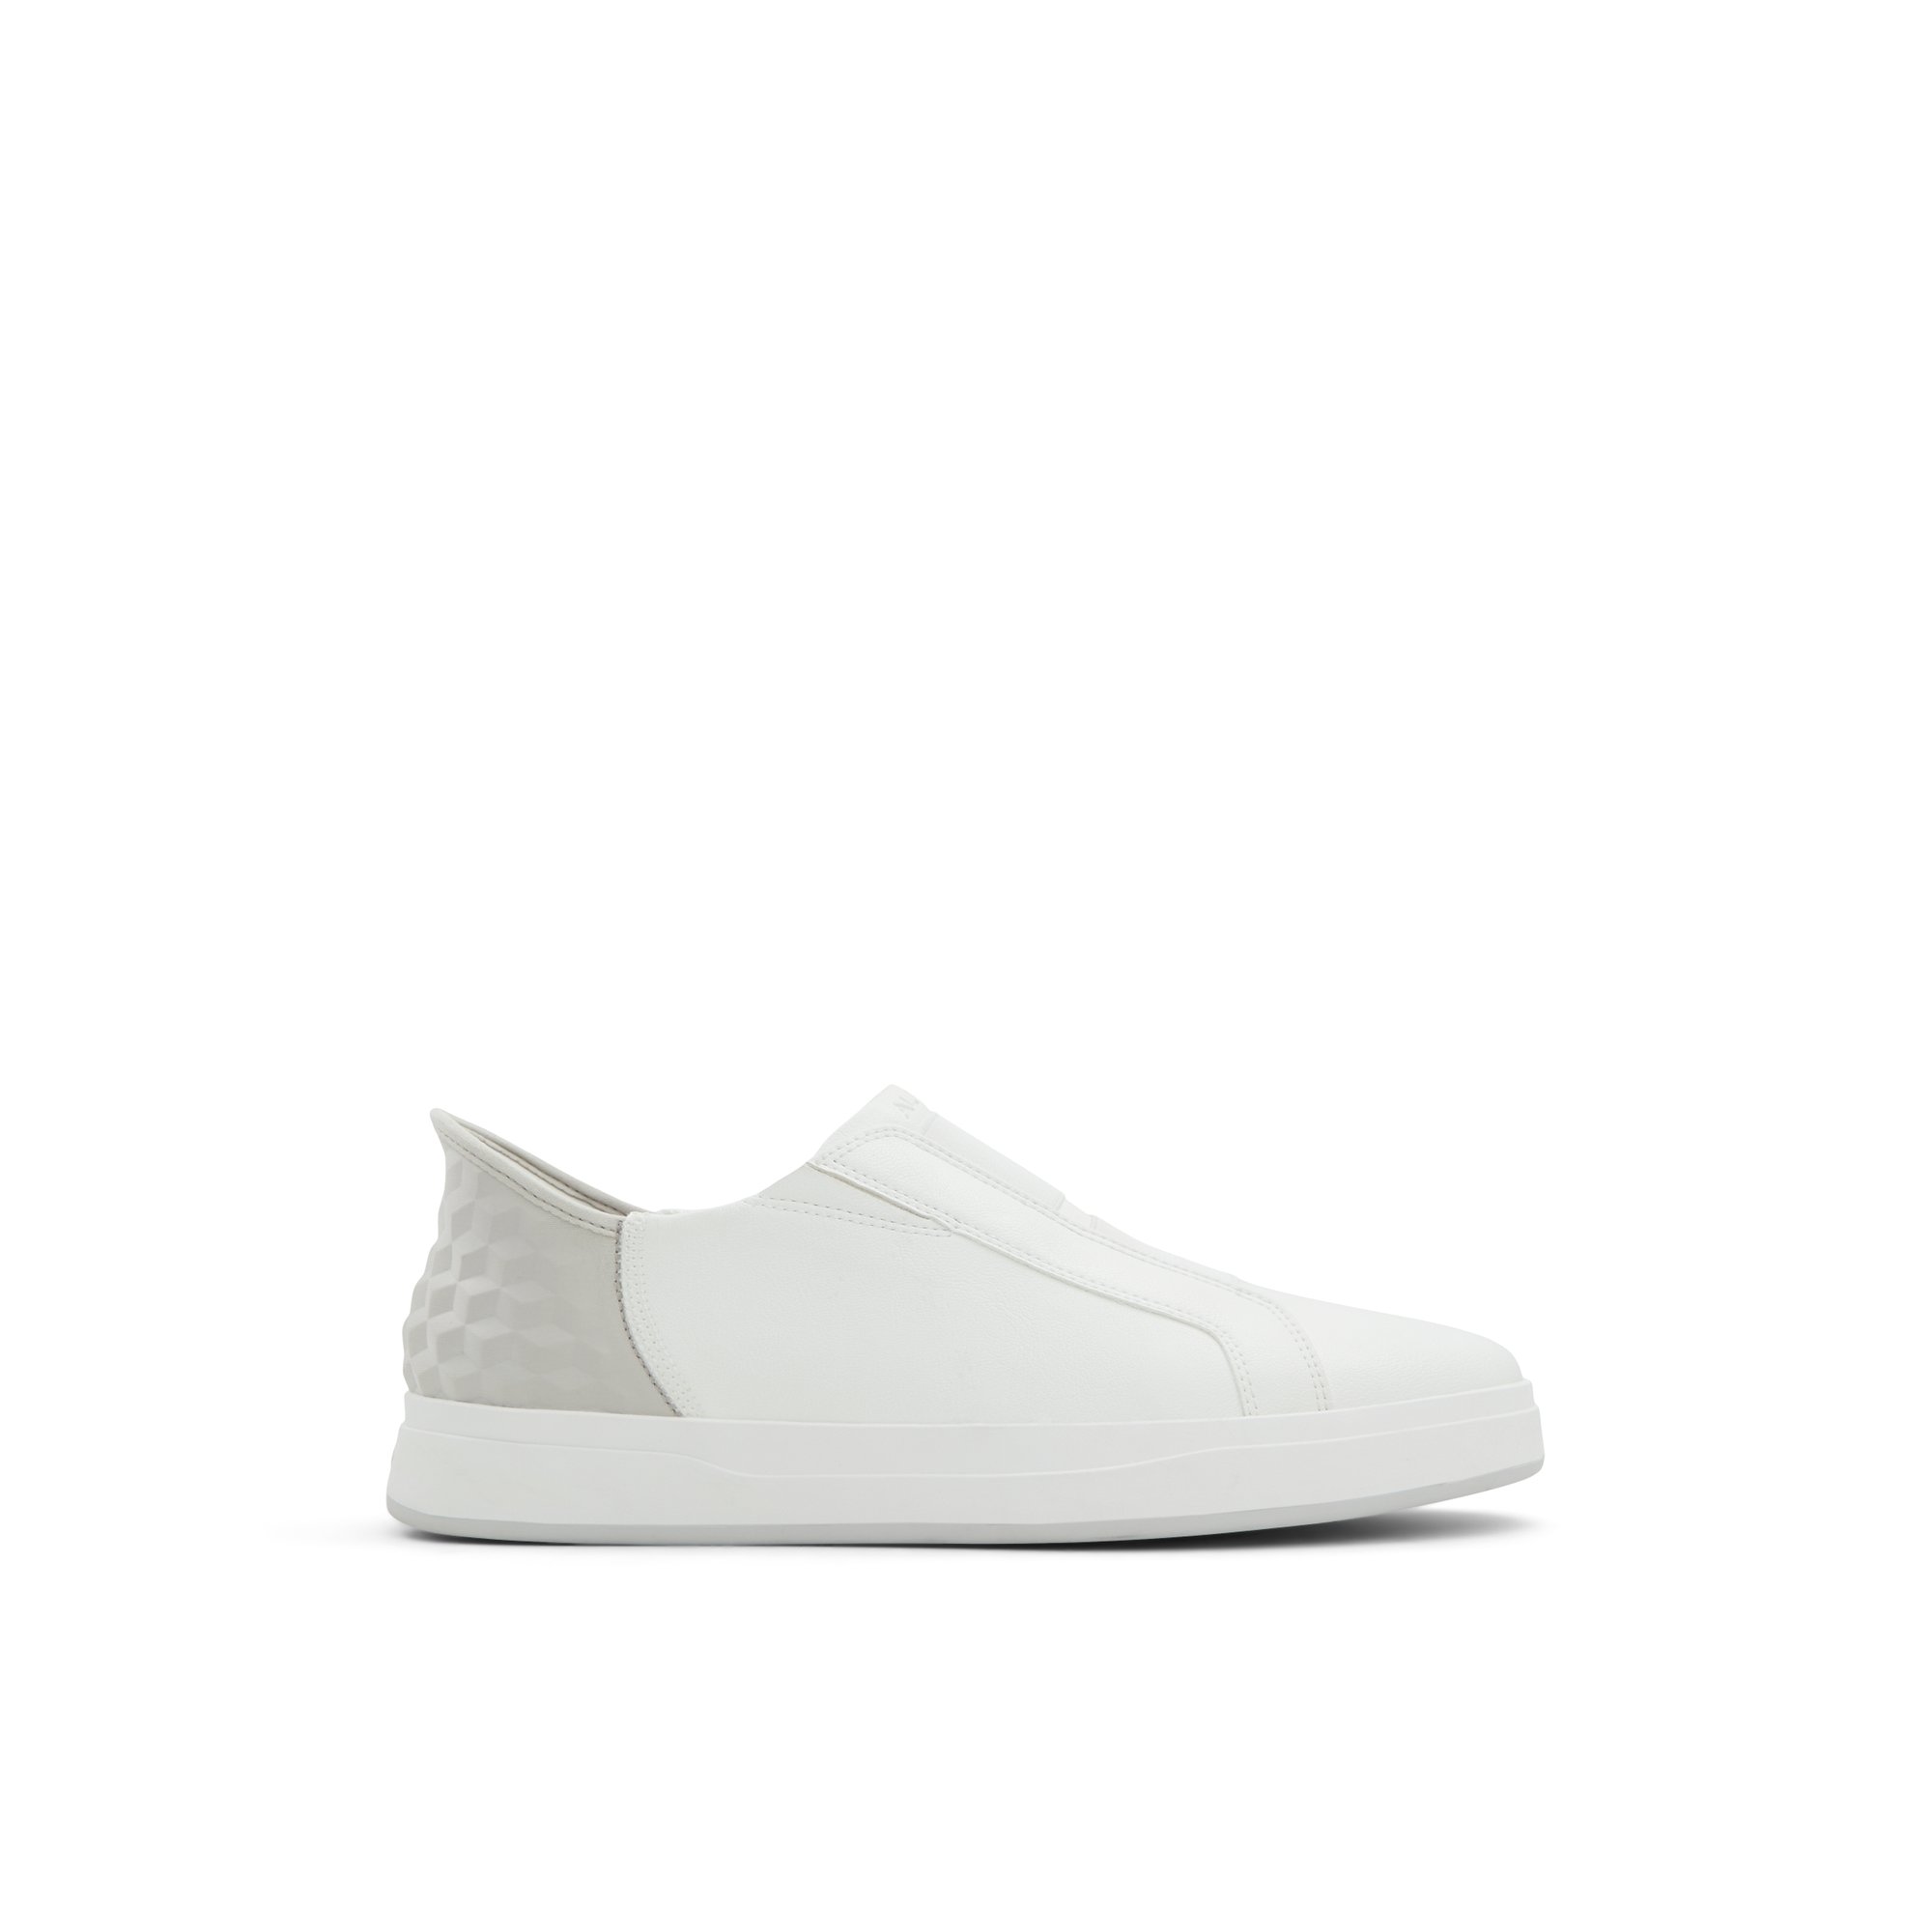 ALDO Rebound - Men's Slip-on Sneakers - White